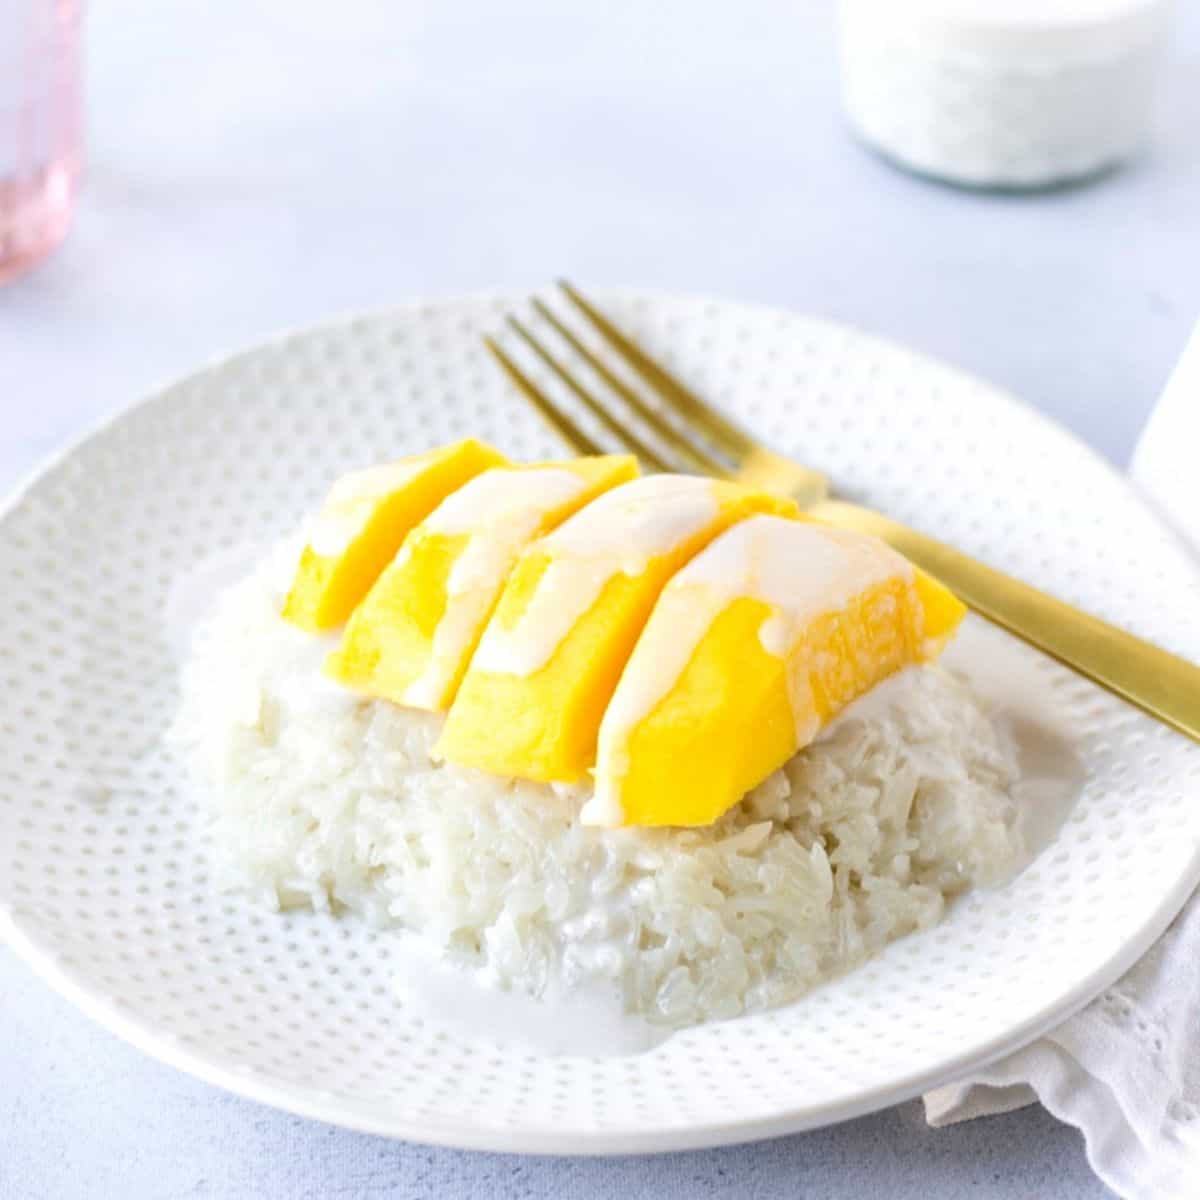 Thai Sweet Sticky Rice with Mango